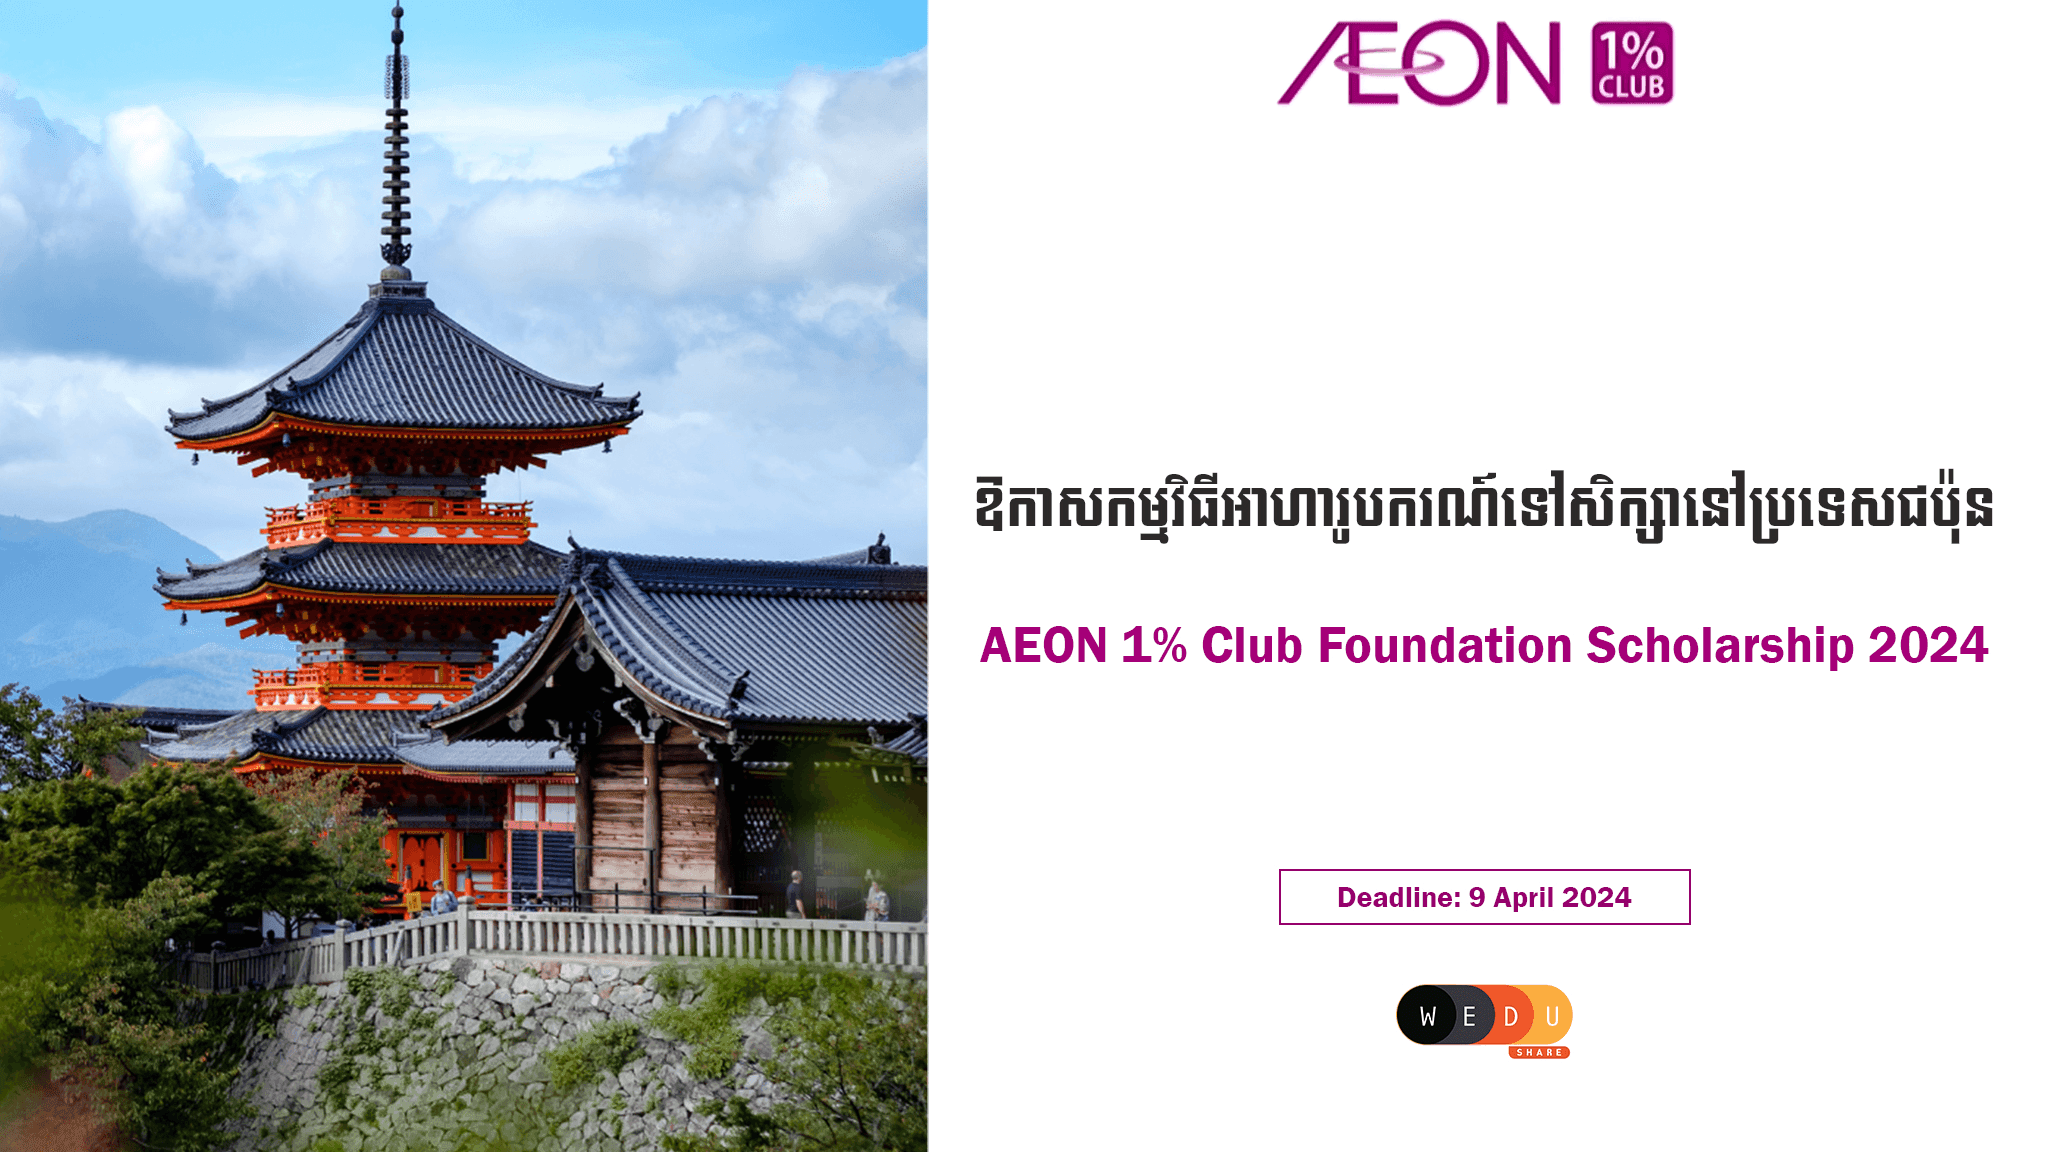 AEON 1% Club Foundation Scholarship 2024